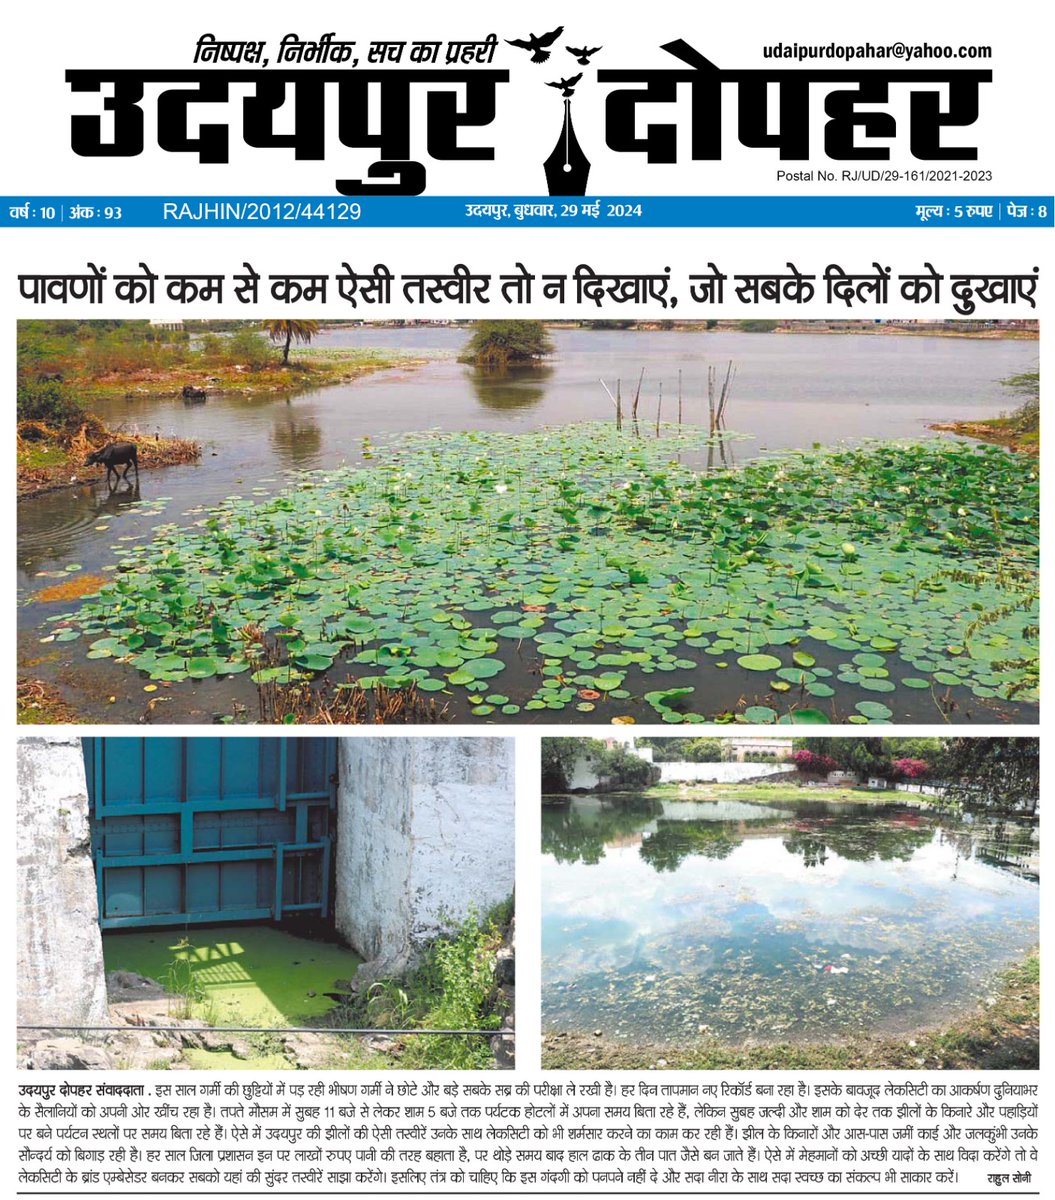 #उदयपुर #प्रमुख #खबरें #उदयपुरदोपहर #राजस्थान #News #UdaipurDopahar #Udaipur #rajasthan #tourist #destination #lake #unclean #water #tourism #dampner